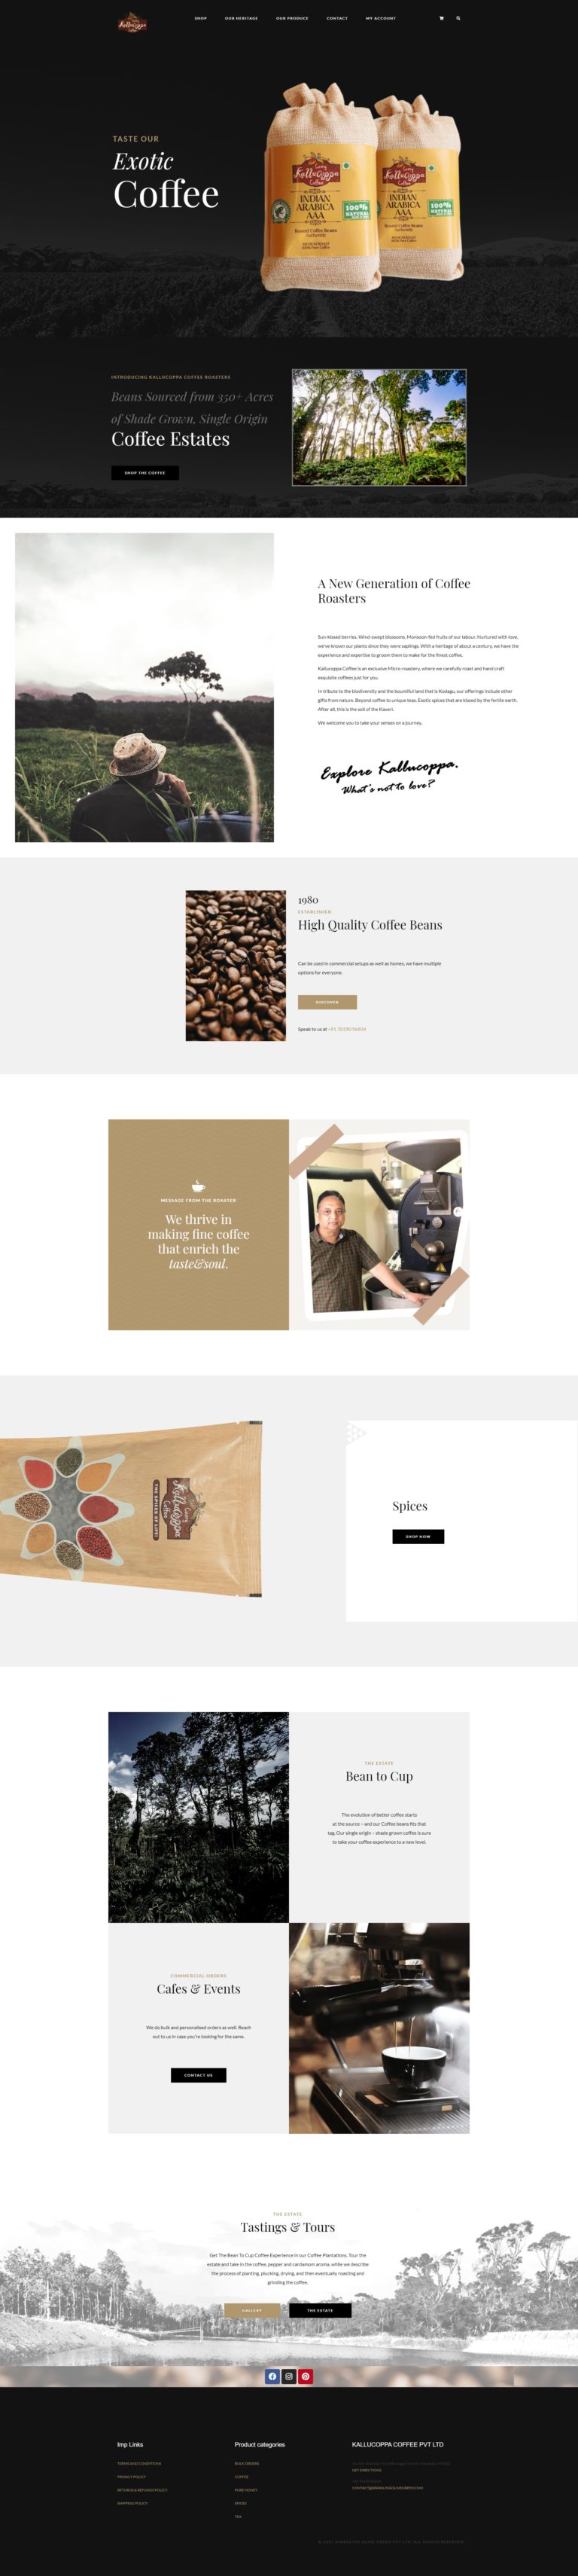 TECSAA-Digital-Marketing-Website-Design-Development-Kallucoppa-Coffee